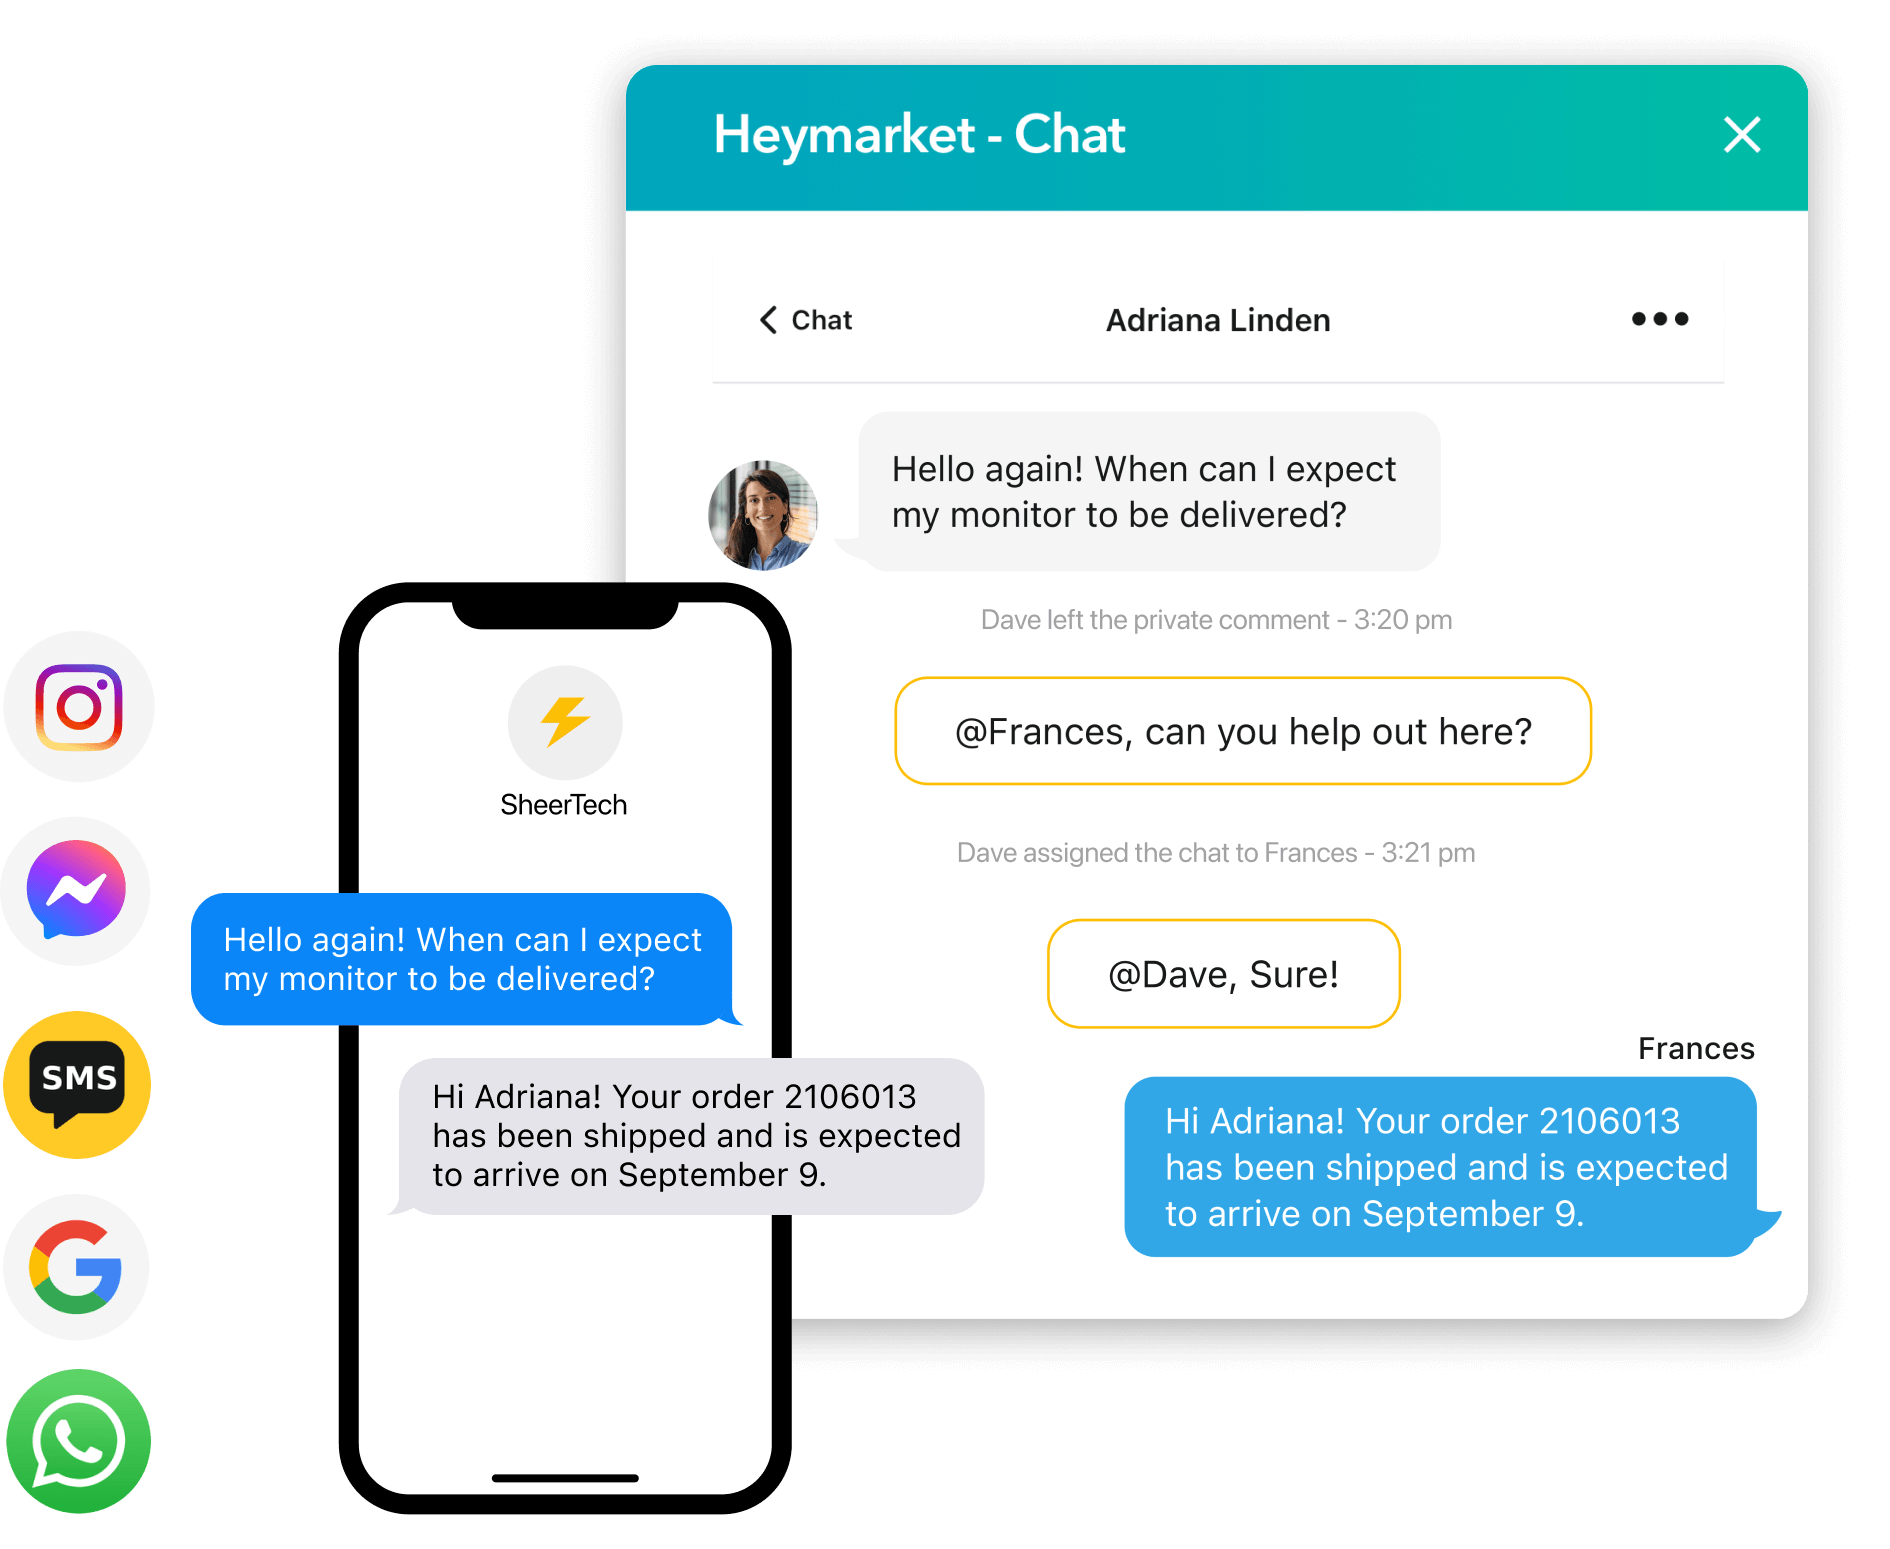 Heymarket's HubSpot integration supports omnichannel messaging